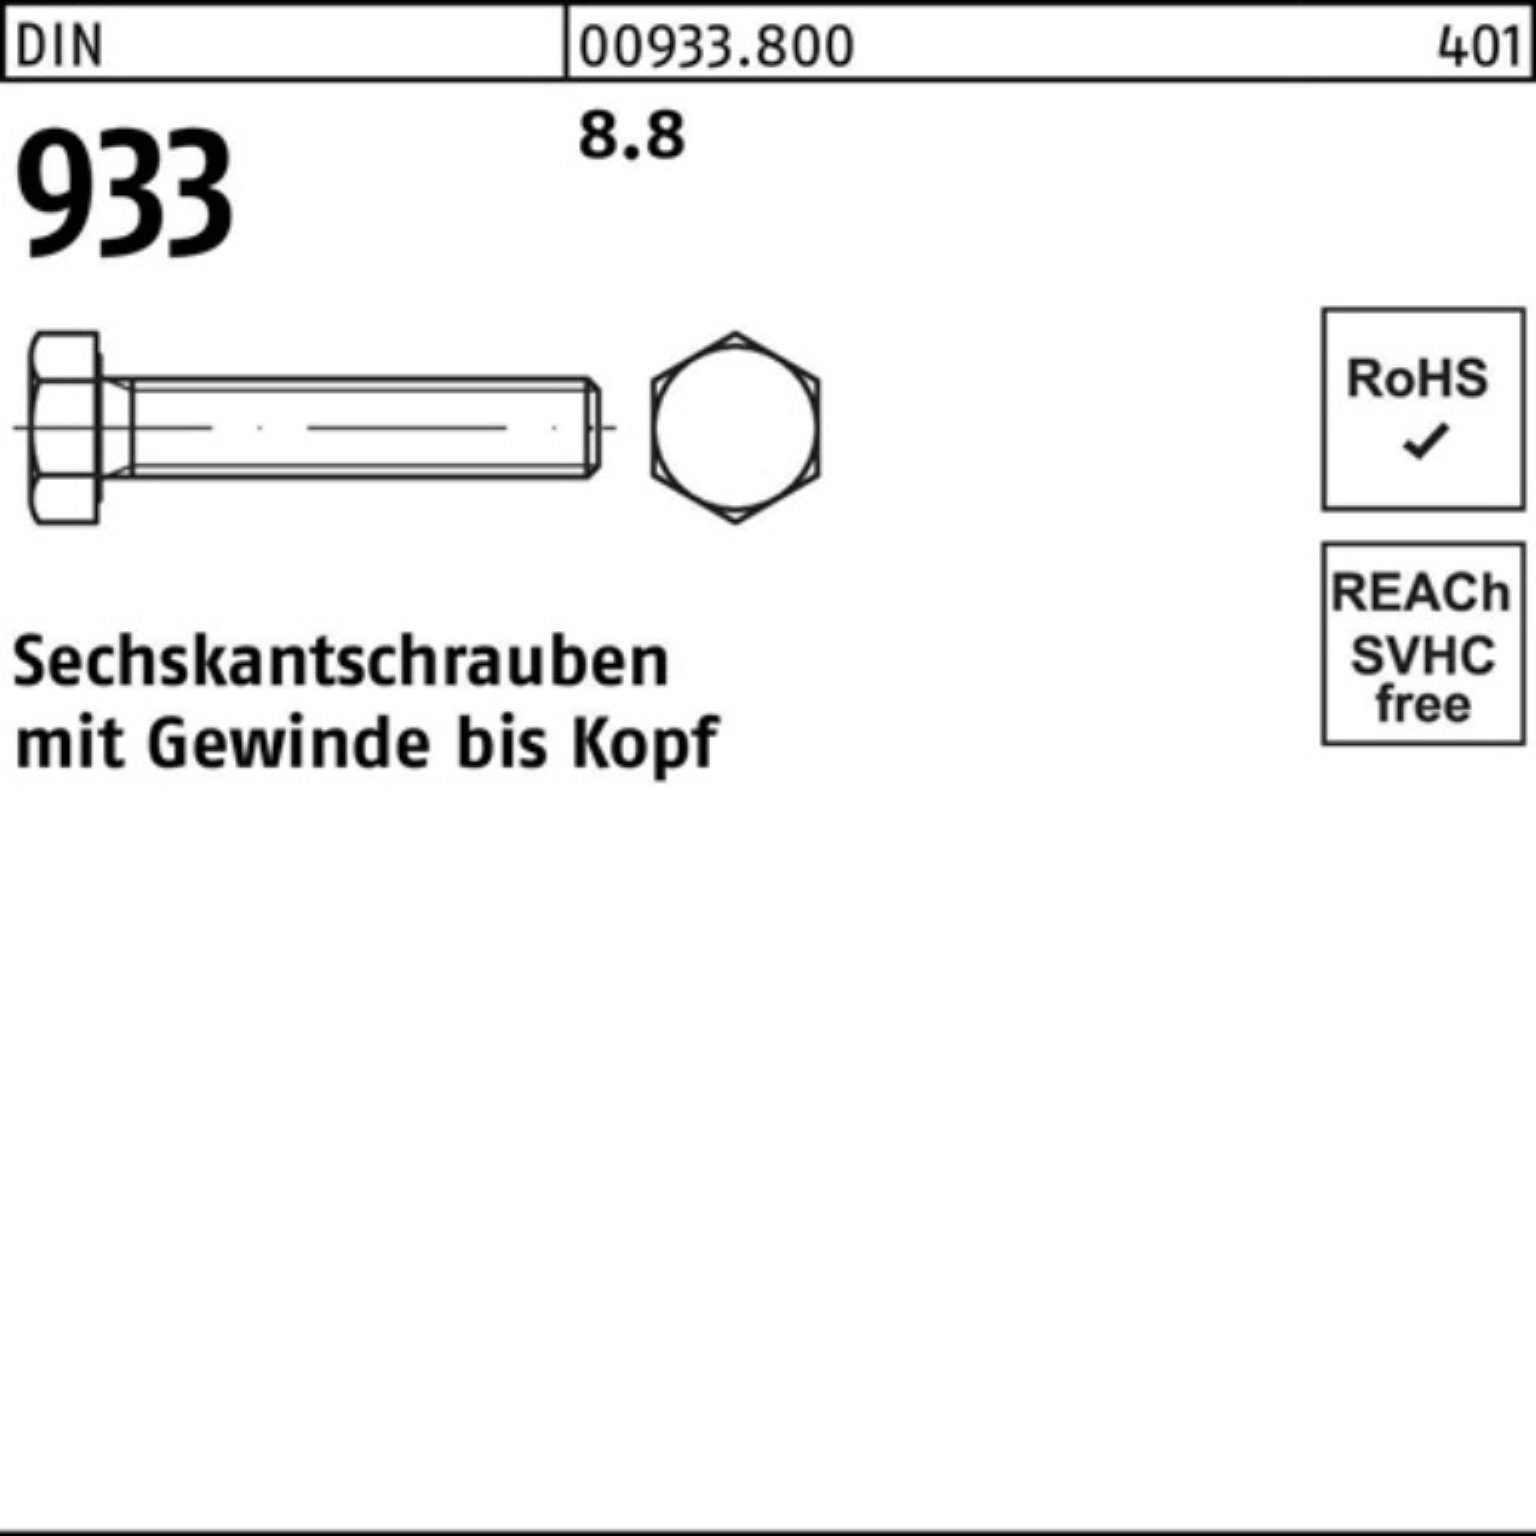 Reyher Sechskantschraube 100er DIN M42x 8.8 190 Pack Stück 933 933 Sechskantschraube 1 DIN VG